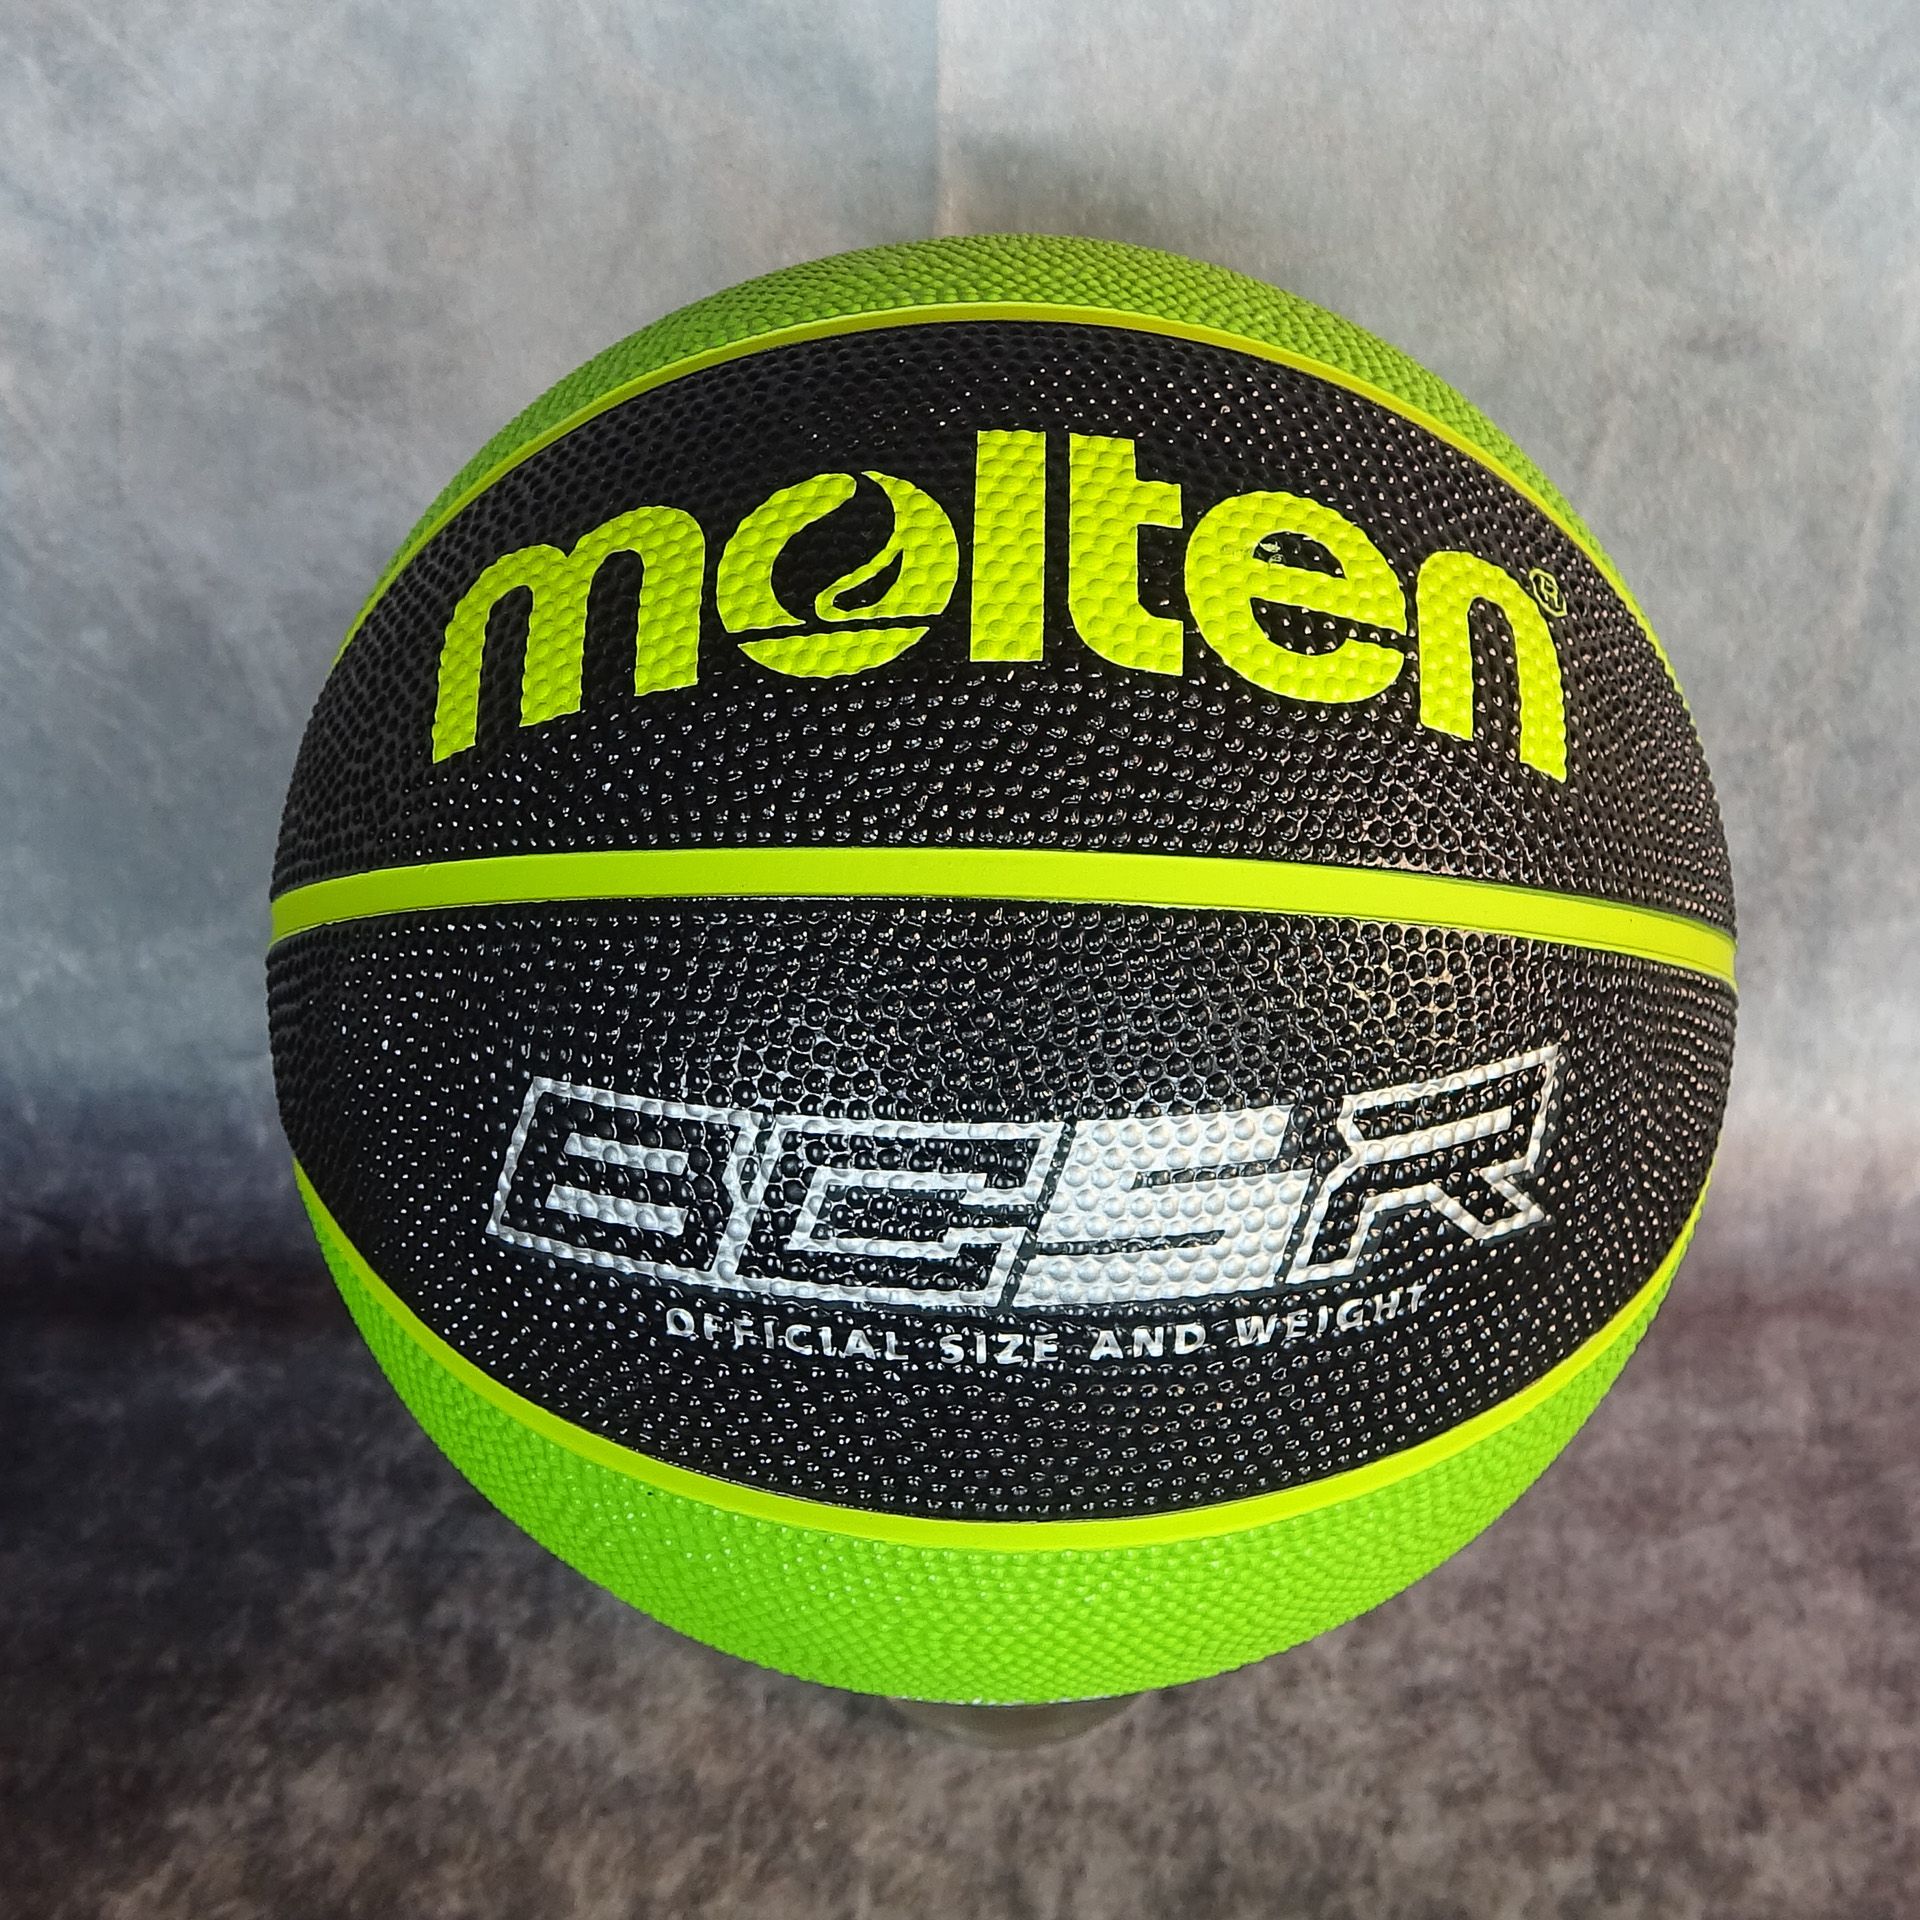 Basketspirit. Tienda online baloncesto. Madrid on X: Balon Molten BC 5 R2  KG. Talla 5. Minibasket. Atractiva pelota de goma minibasket Molten, una de  las mejores marcas de balones de baloncesto Talla